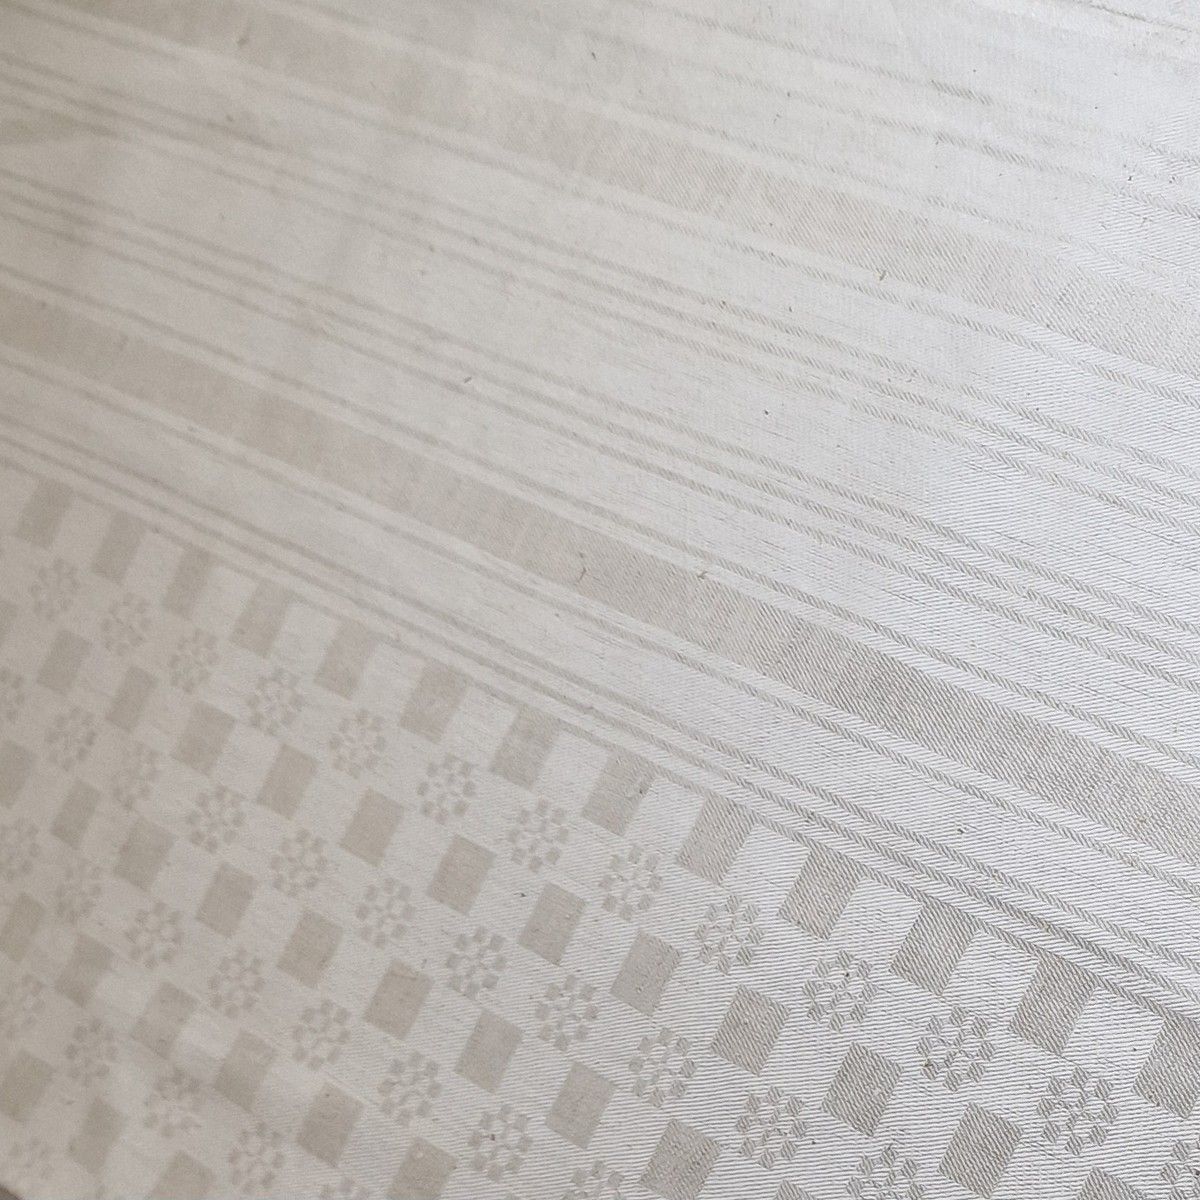 Null 大型白色棉锦缎矩形围巾 约 1930 年，编织有风格化的玫瑰花形和格纹装饰，边缘有多条条纹
350 x 160 厘米
崭新如初
底色发黄
(按原样出售&hellip;